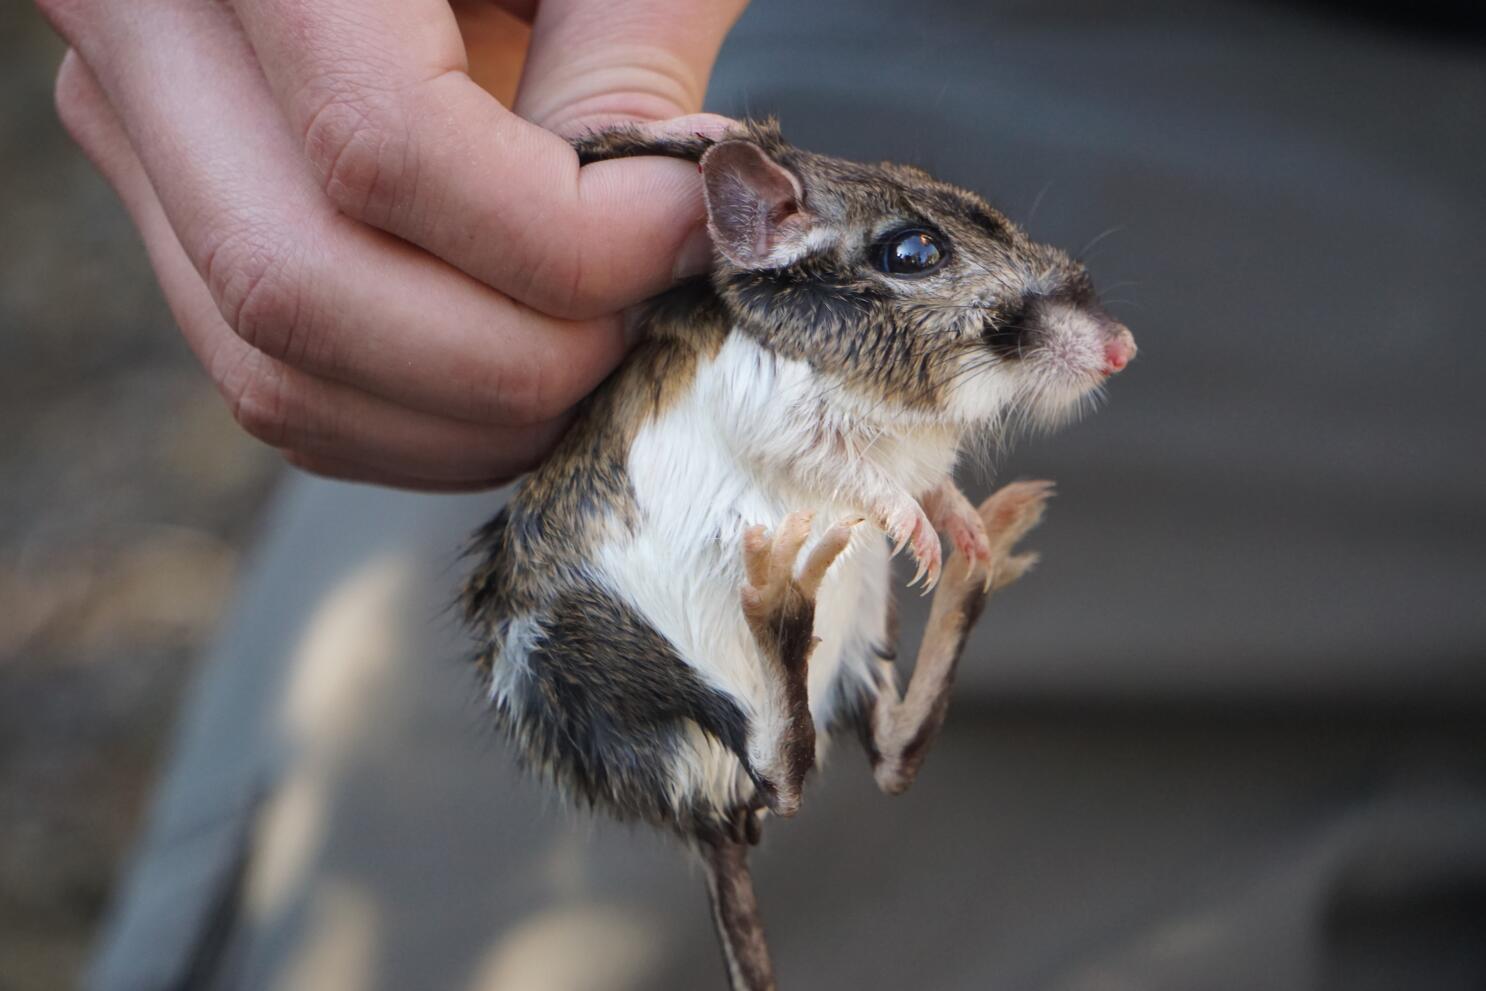 Kangaroo rat offers clues about health of Santa Cruz Mountains